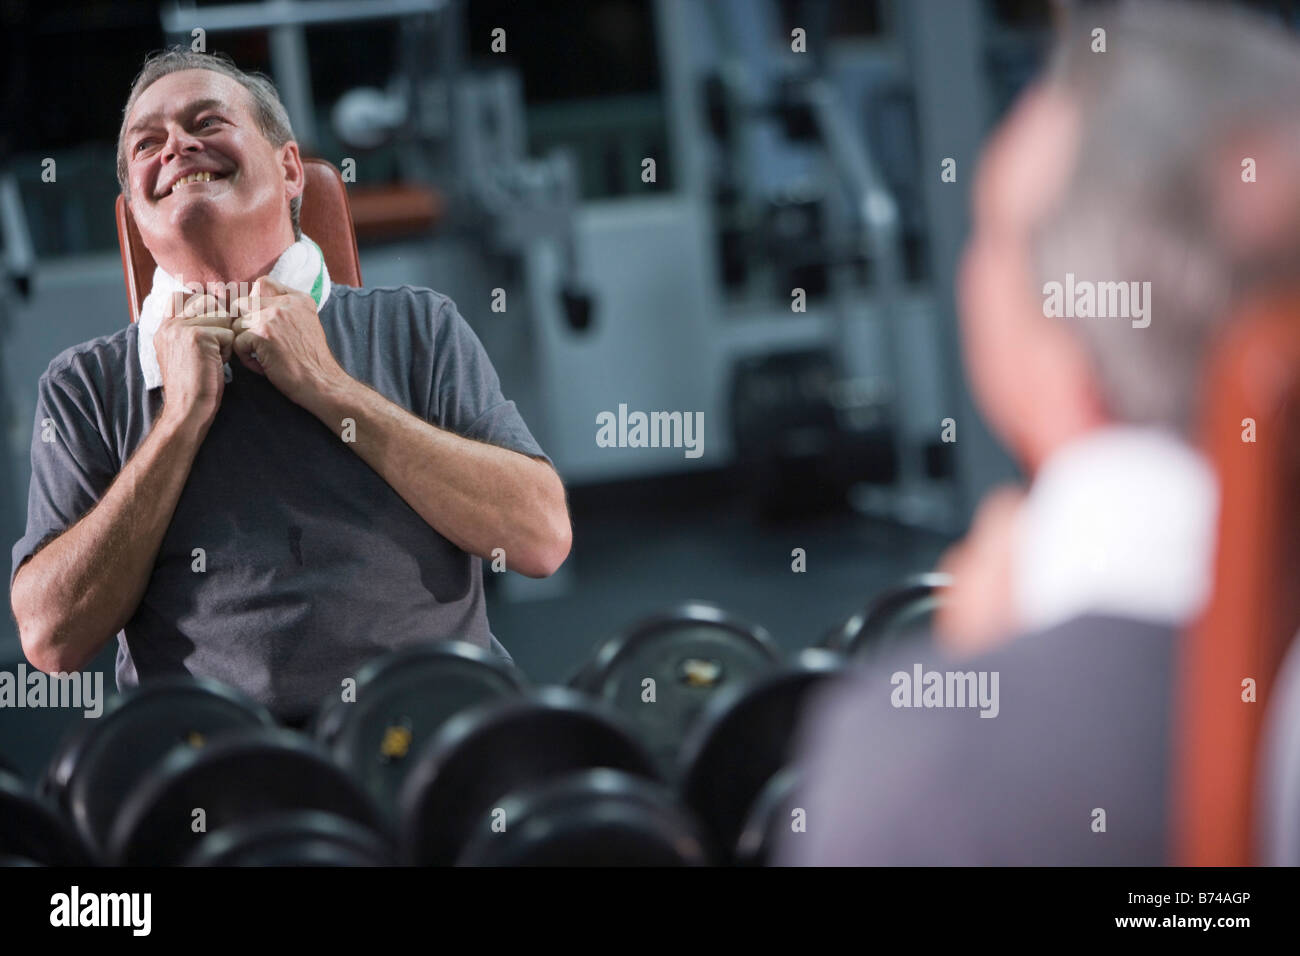 Senior man working out at gym, laughing Stock Photo